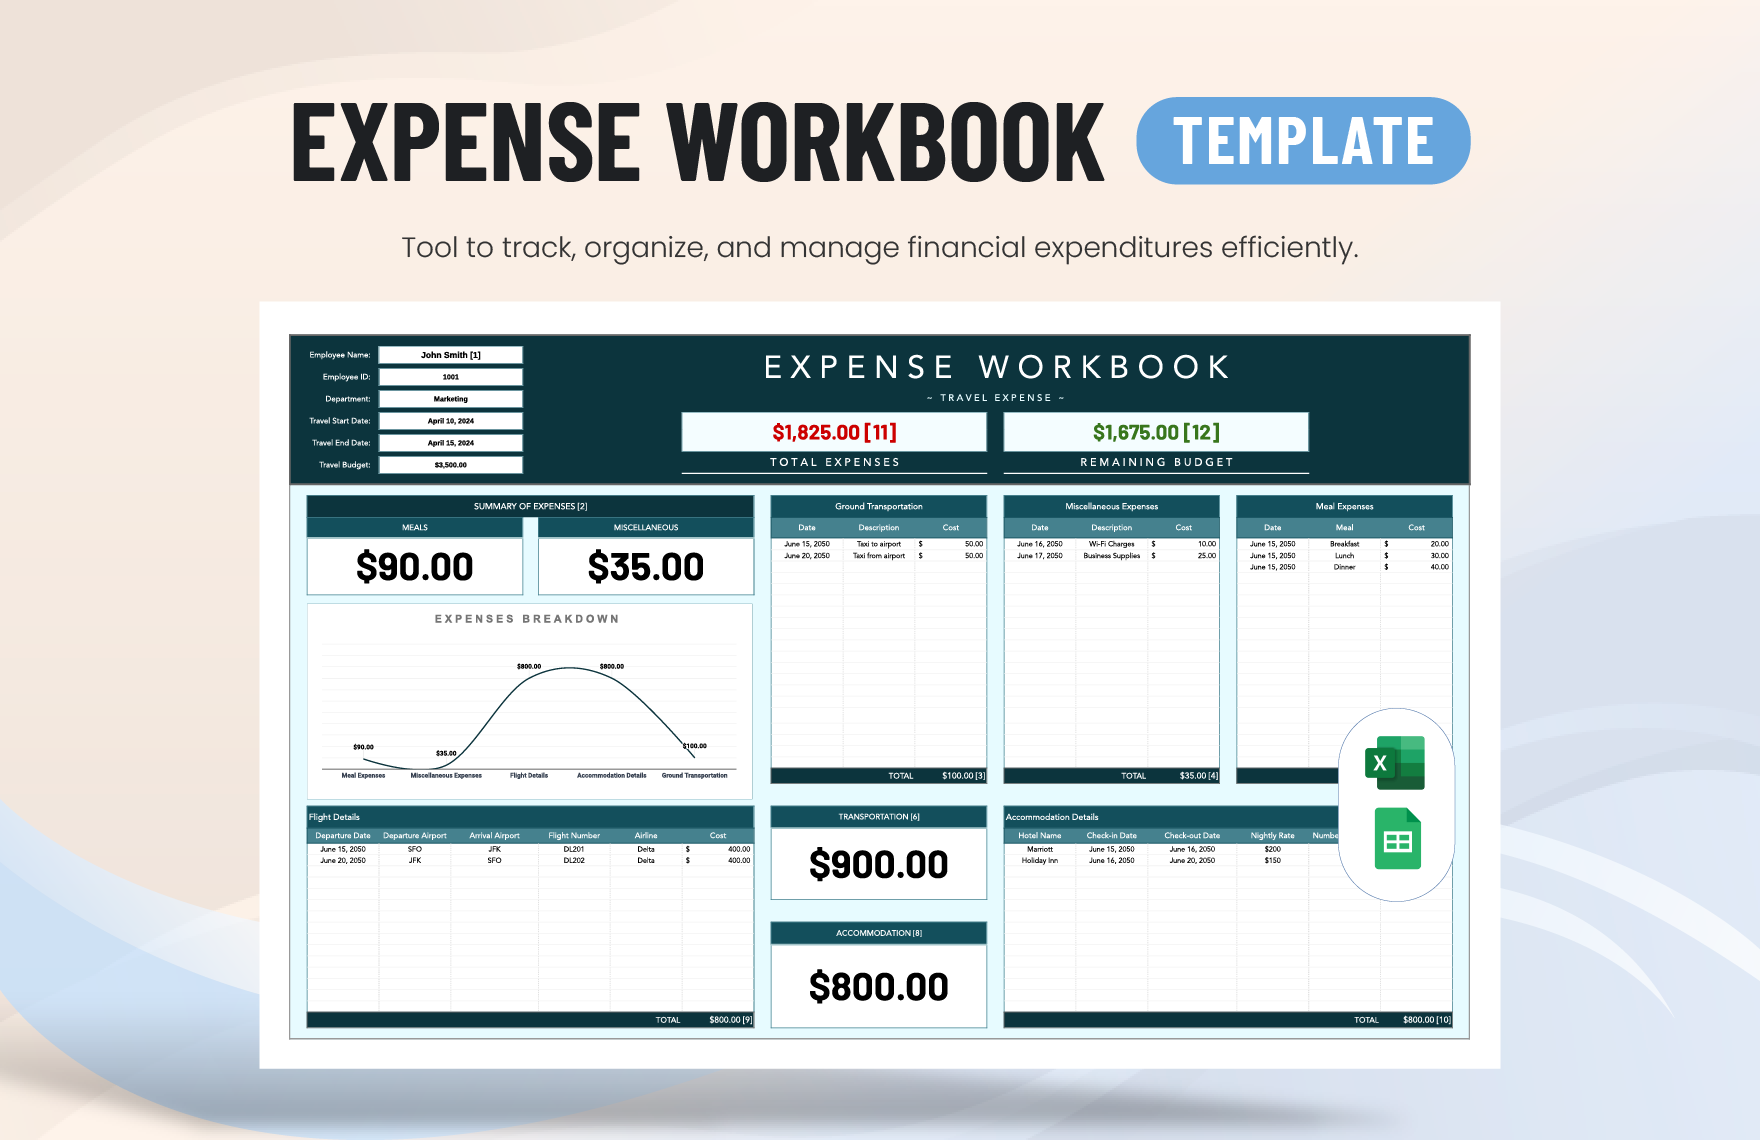 Expense Workbook Template